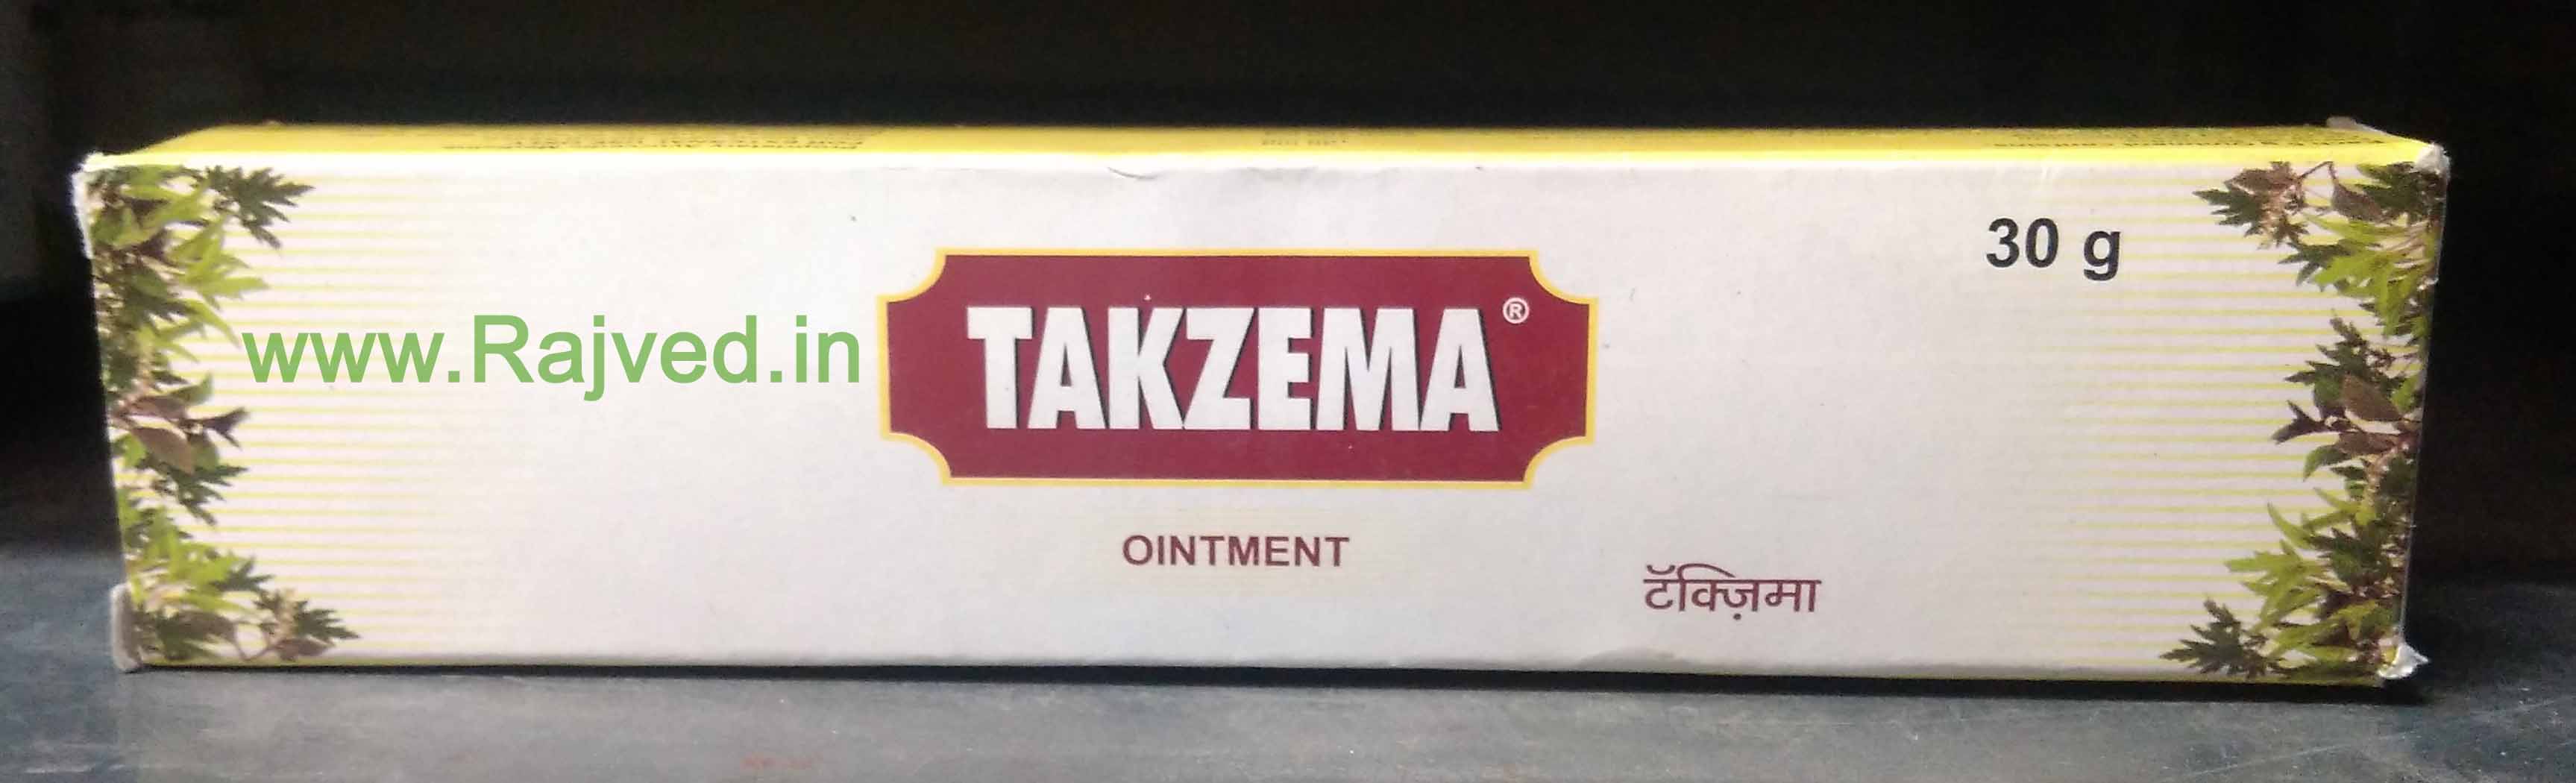 takzema ointment 30gm upto 15% off charak pharma mumbai